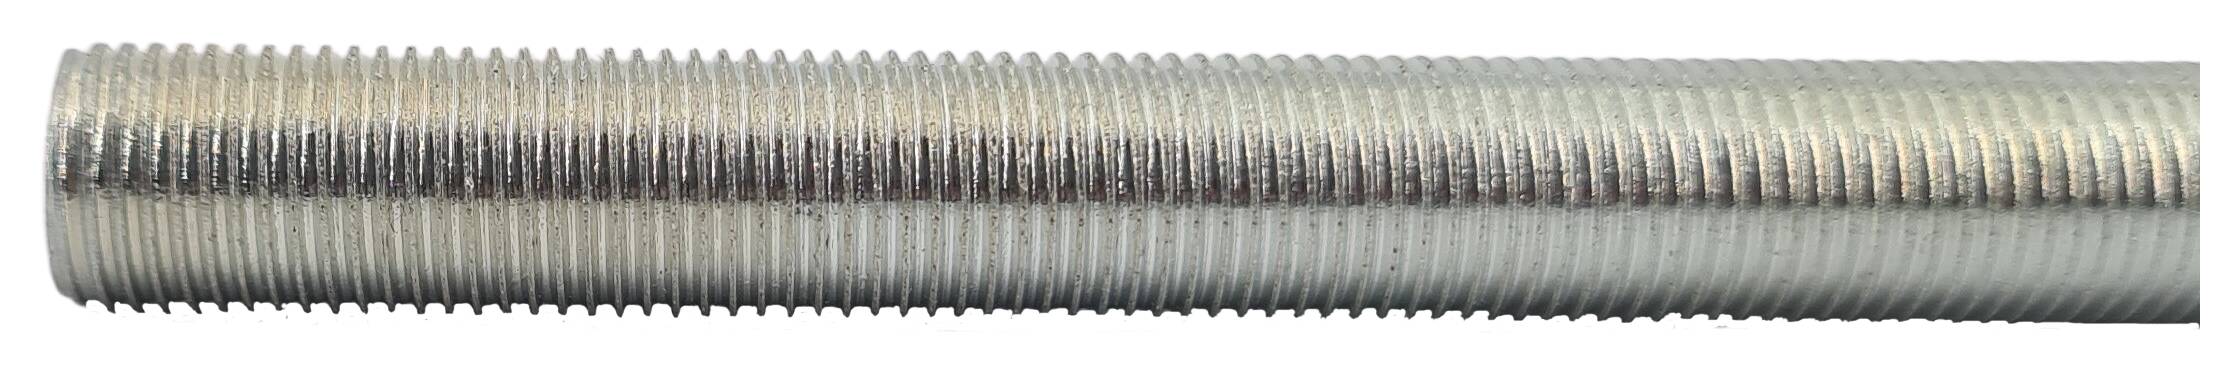 iron thread tube M10x1x375 round zinc